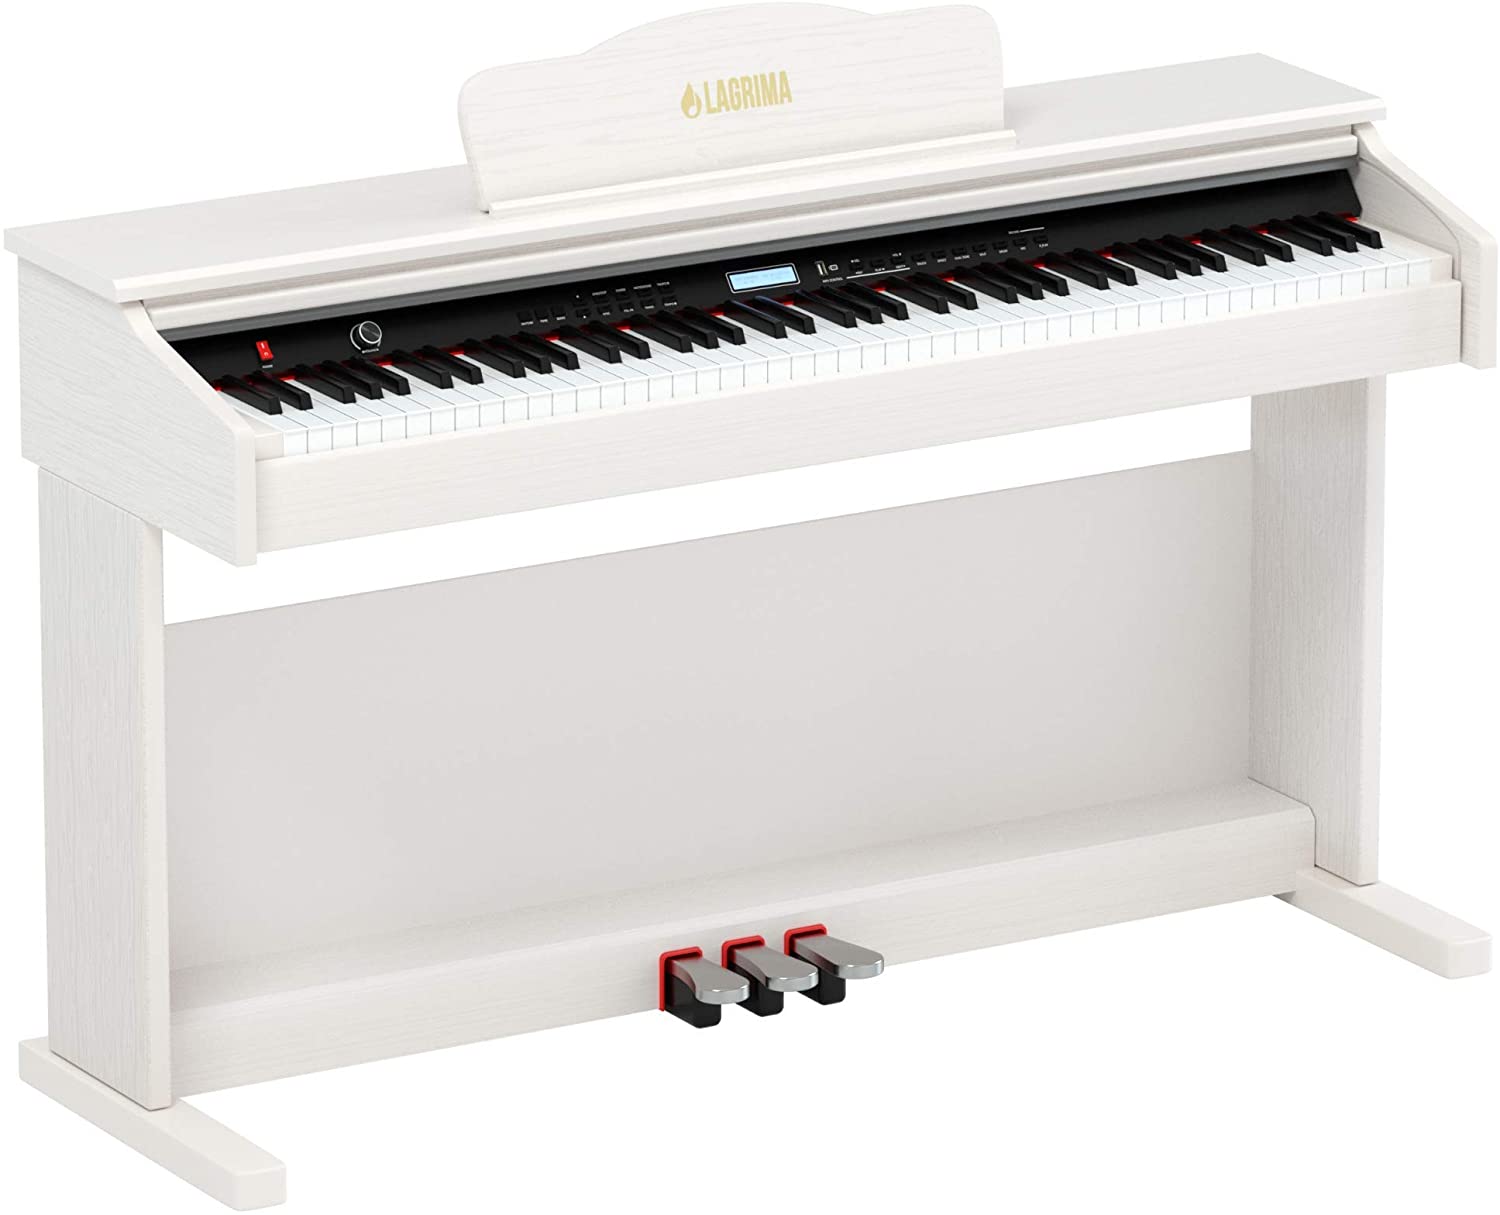 LAGRIMA LG-8830 Digital Piano